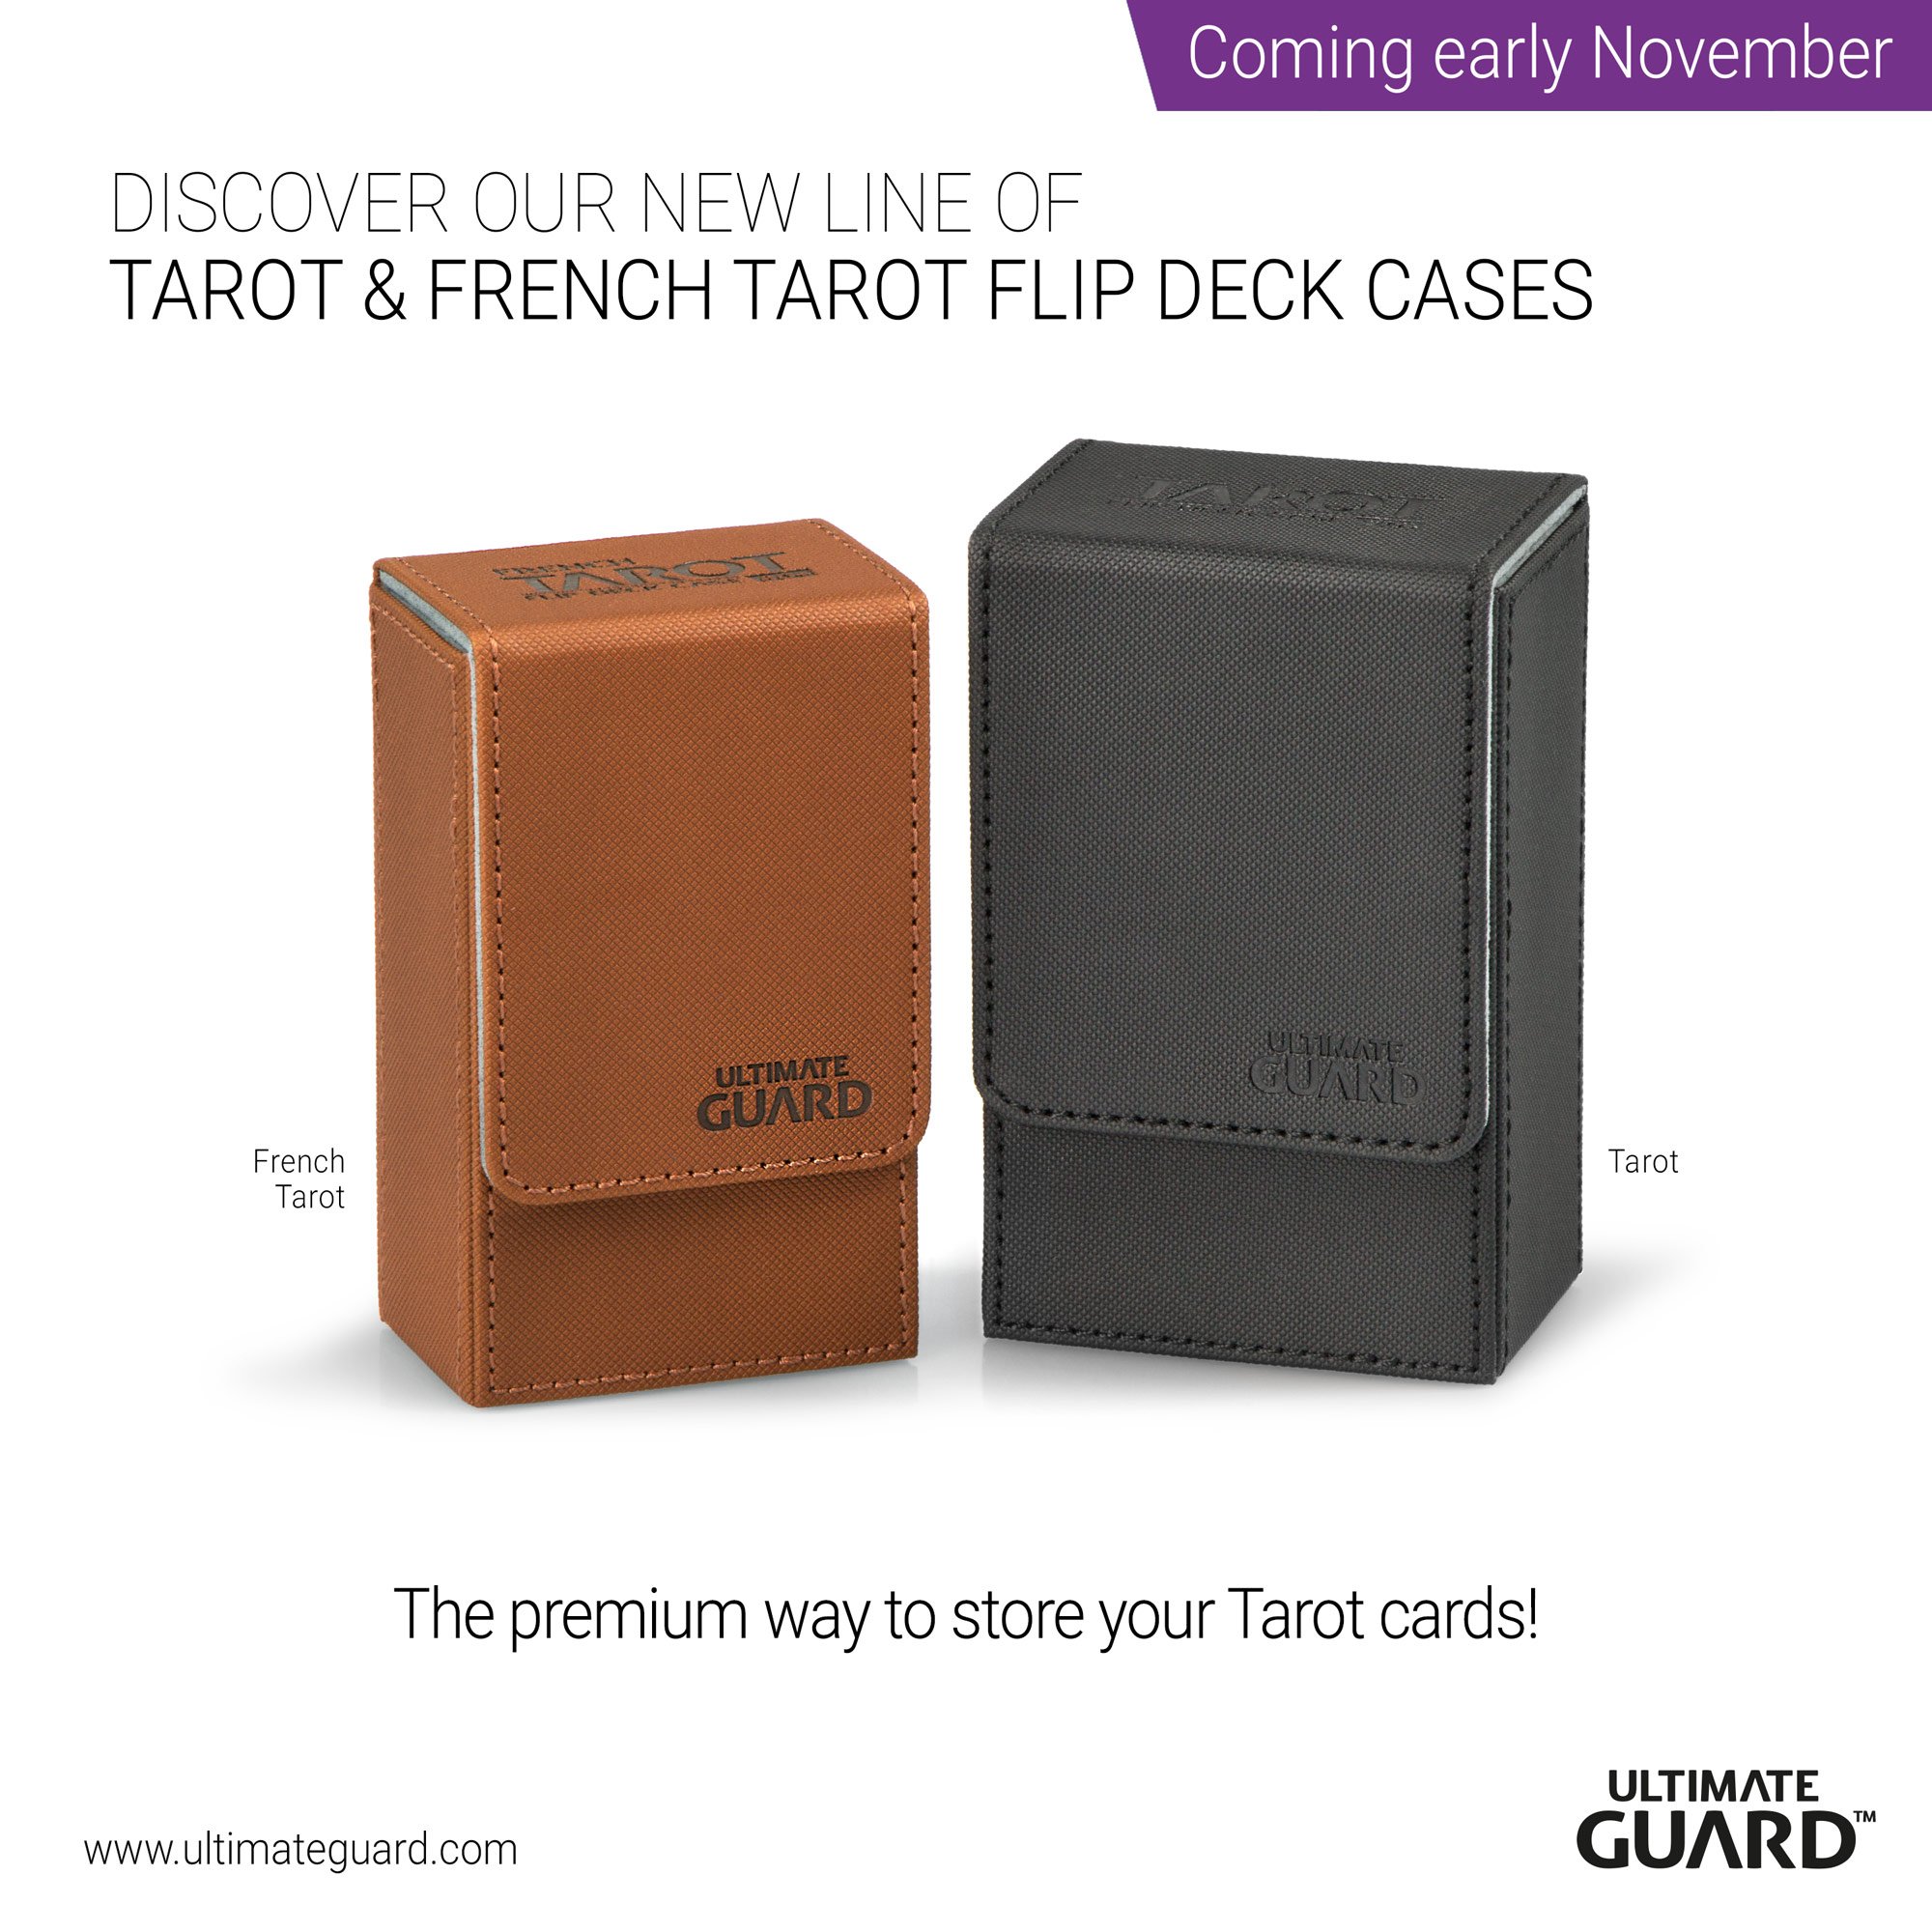 Oír de Asociar terraza Ultimate Guard on Twitter: "The Tarot Flip Deck Case 70+ and the French  Tarot Flip Deck Case 80+ will hit stores in early November!  https://t.co/AI0dJFGWZq" / Twitter